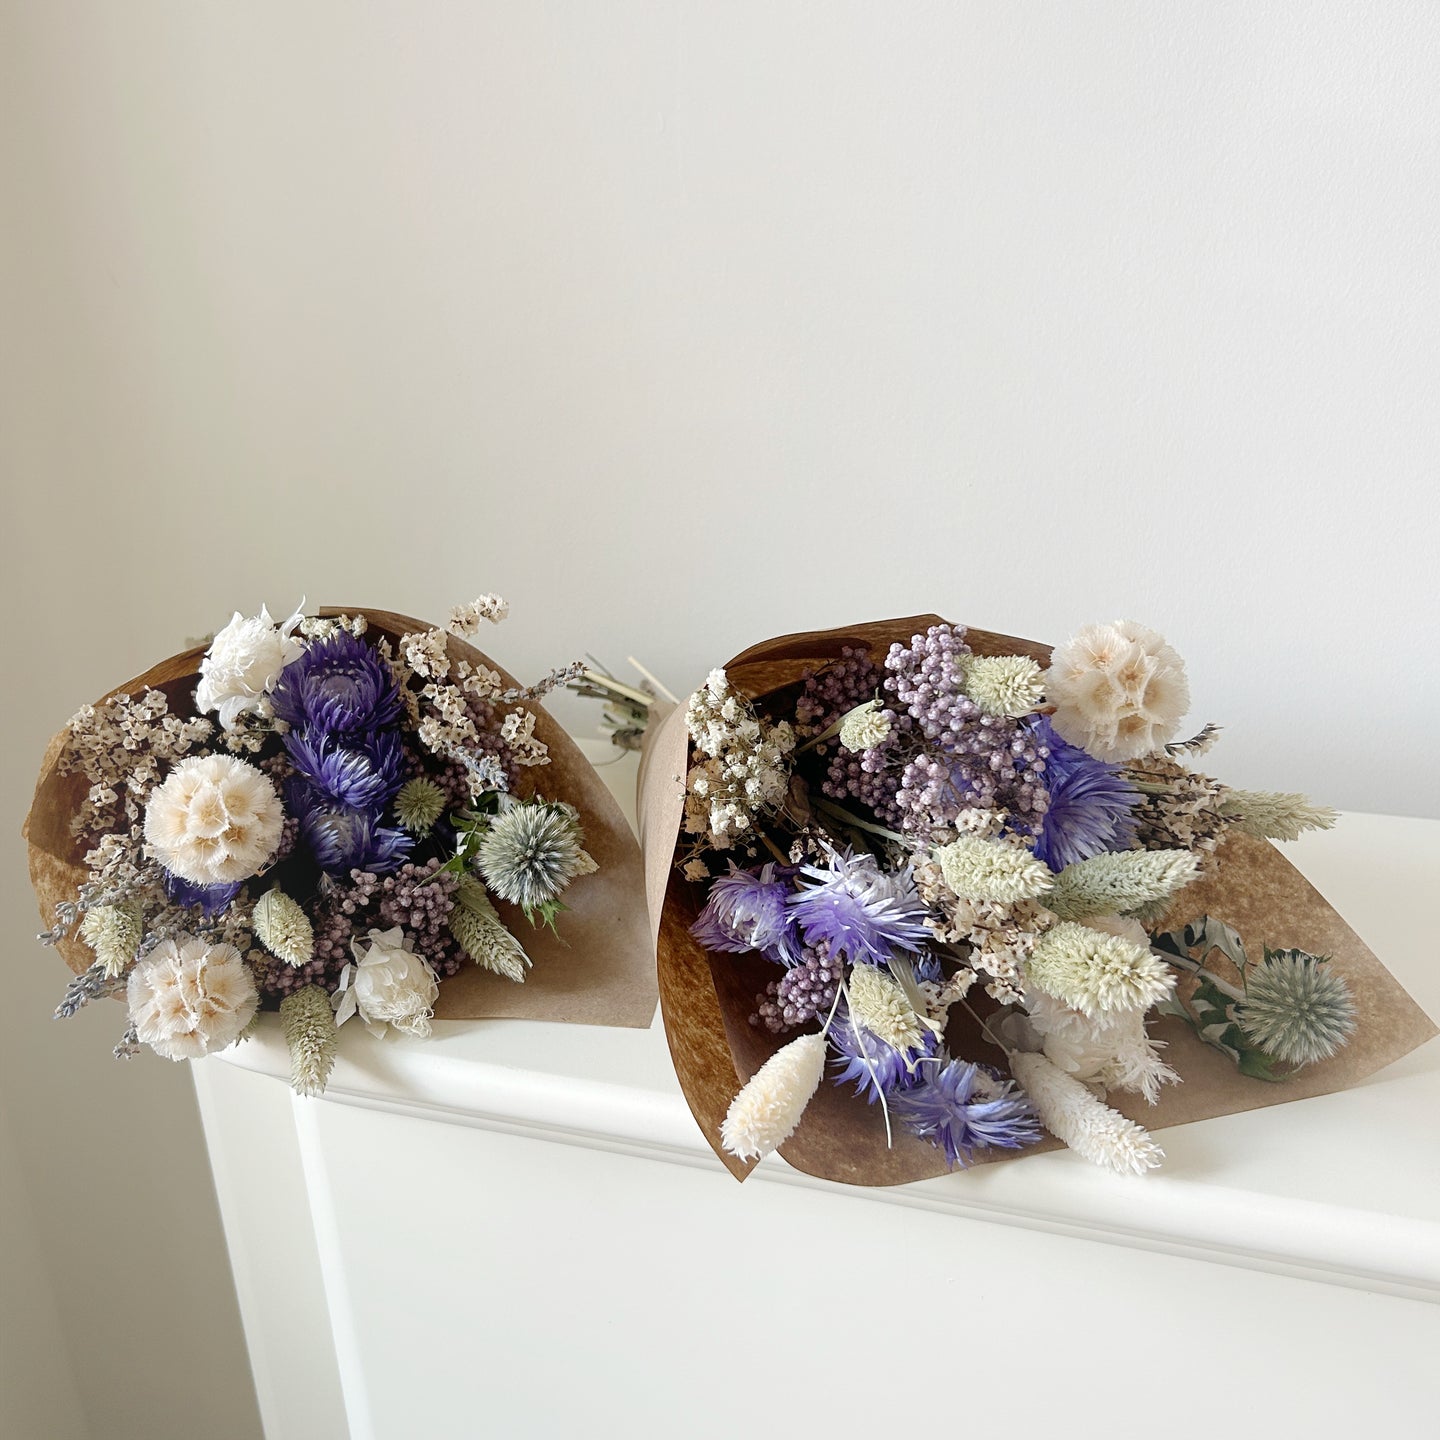 Purple dried flowers bundle